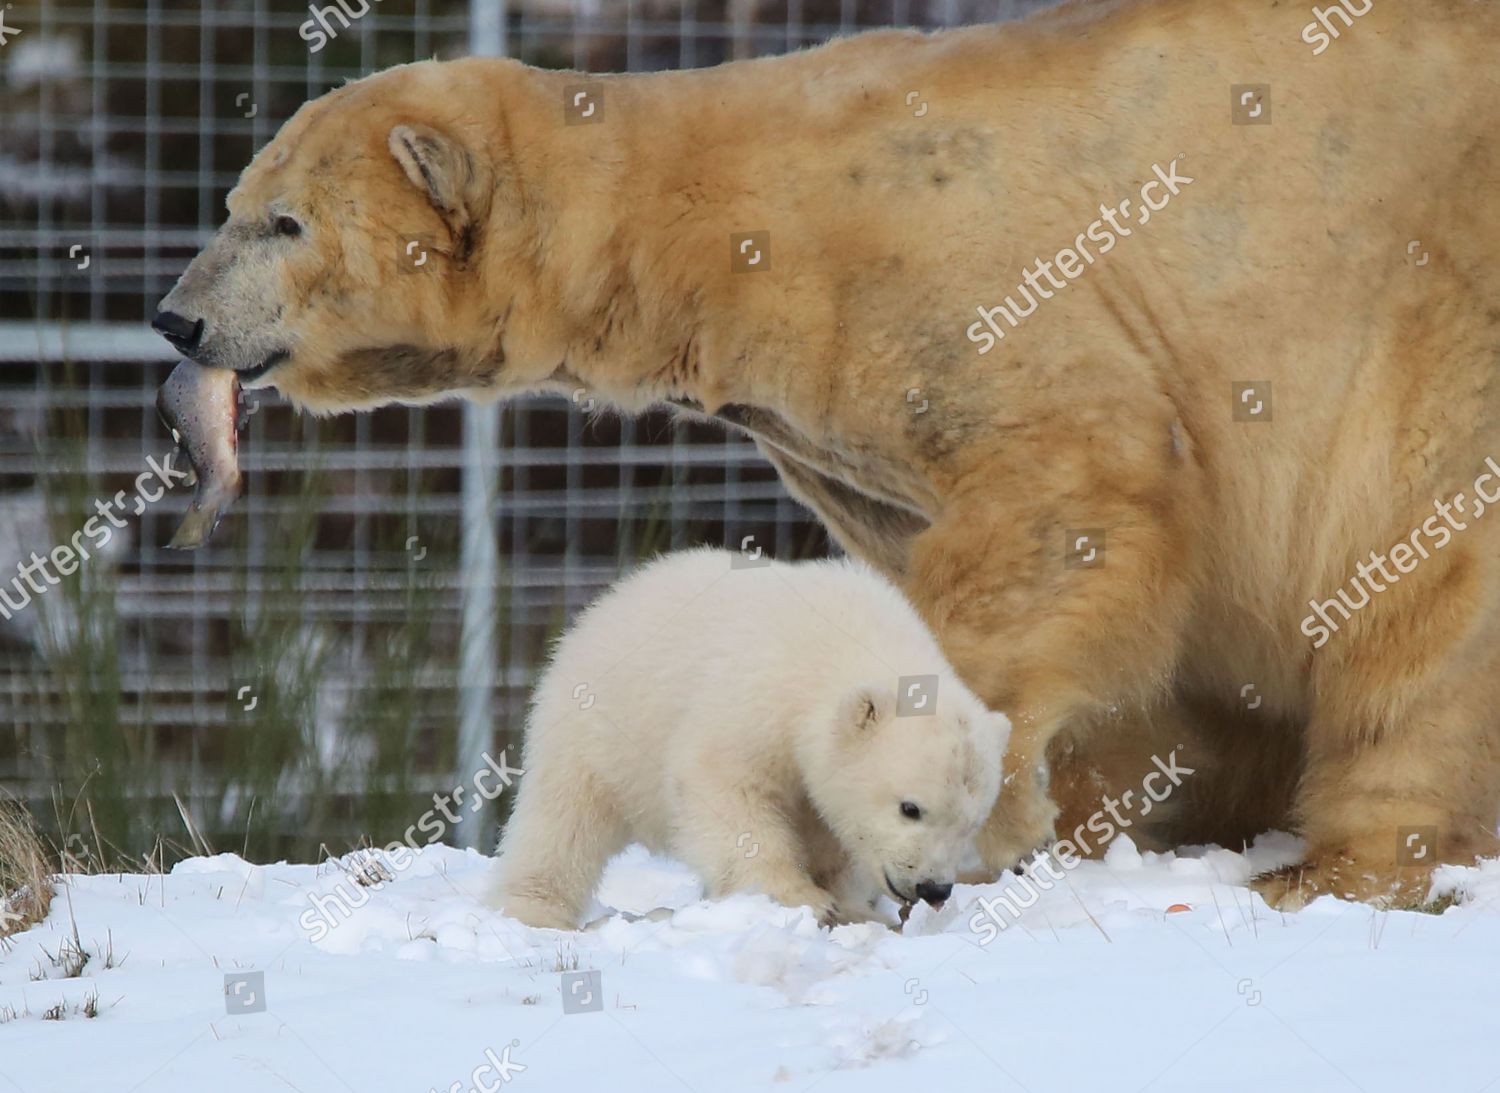 Brodie Polar Bear Cub Gets His Editorial Stock Photo Stock Image